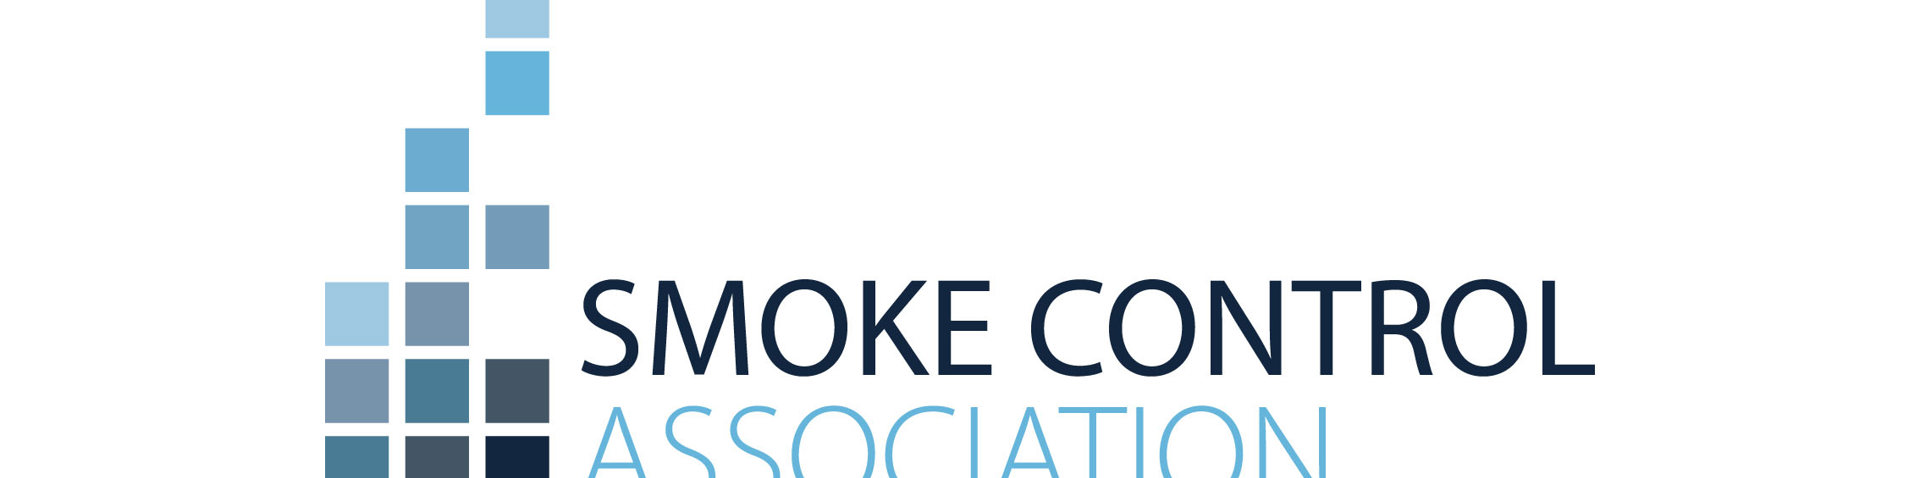 Smoke Control Association